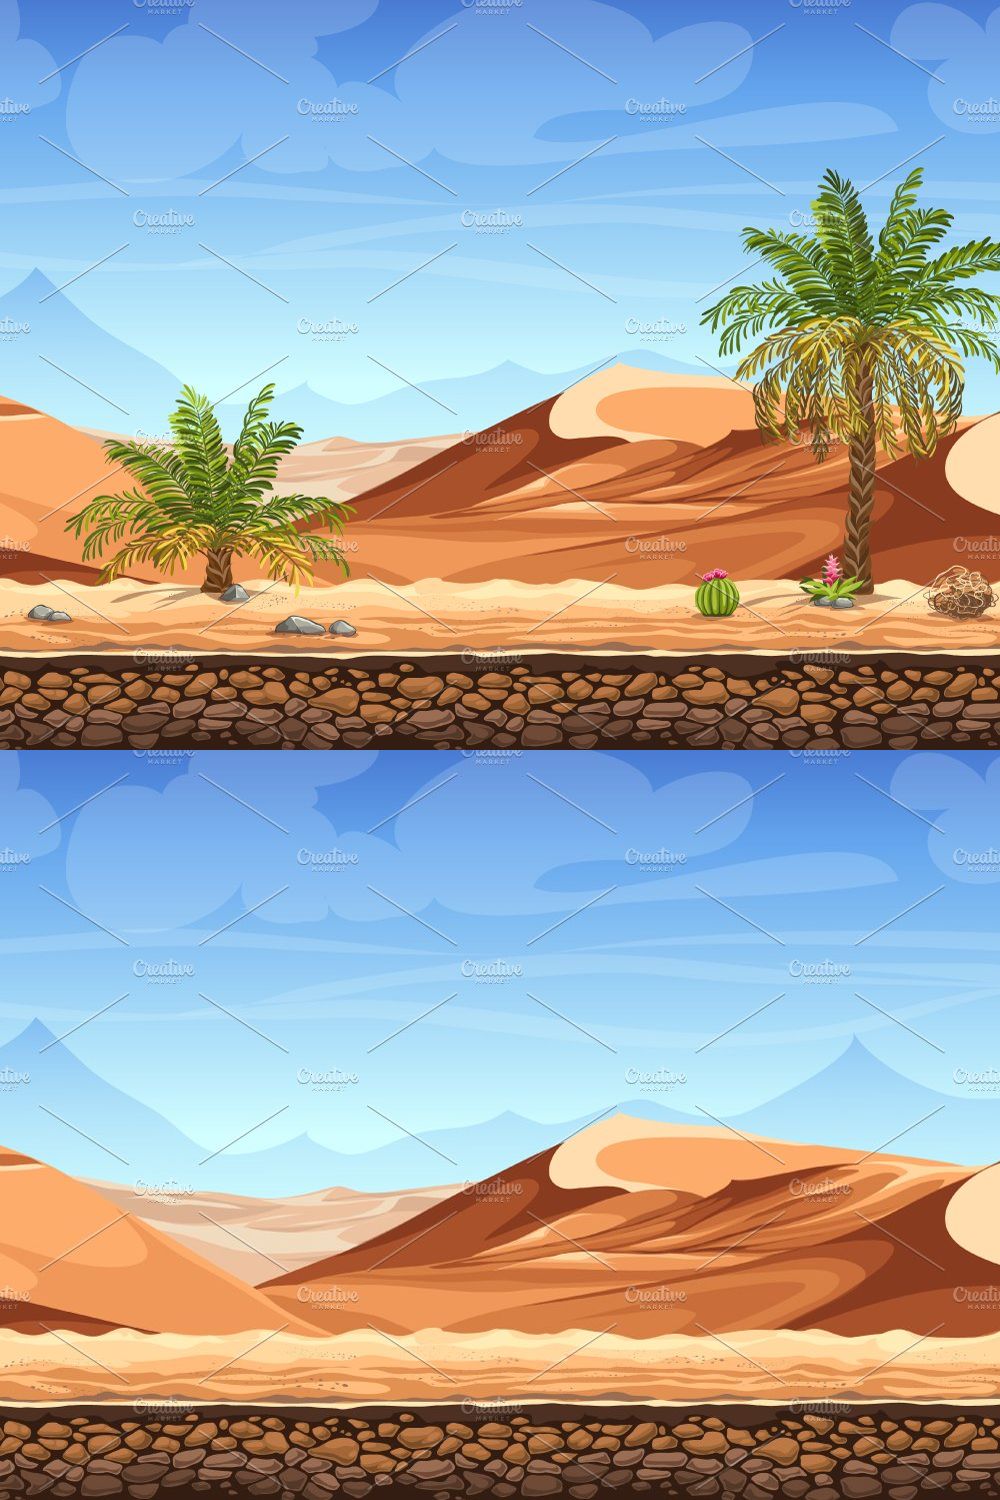 Palm trees in desert pinterest preview image.